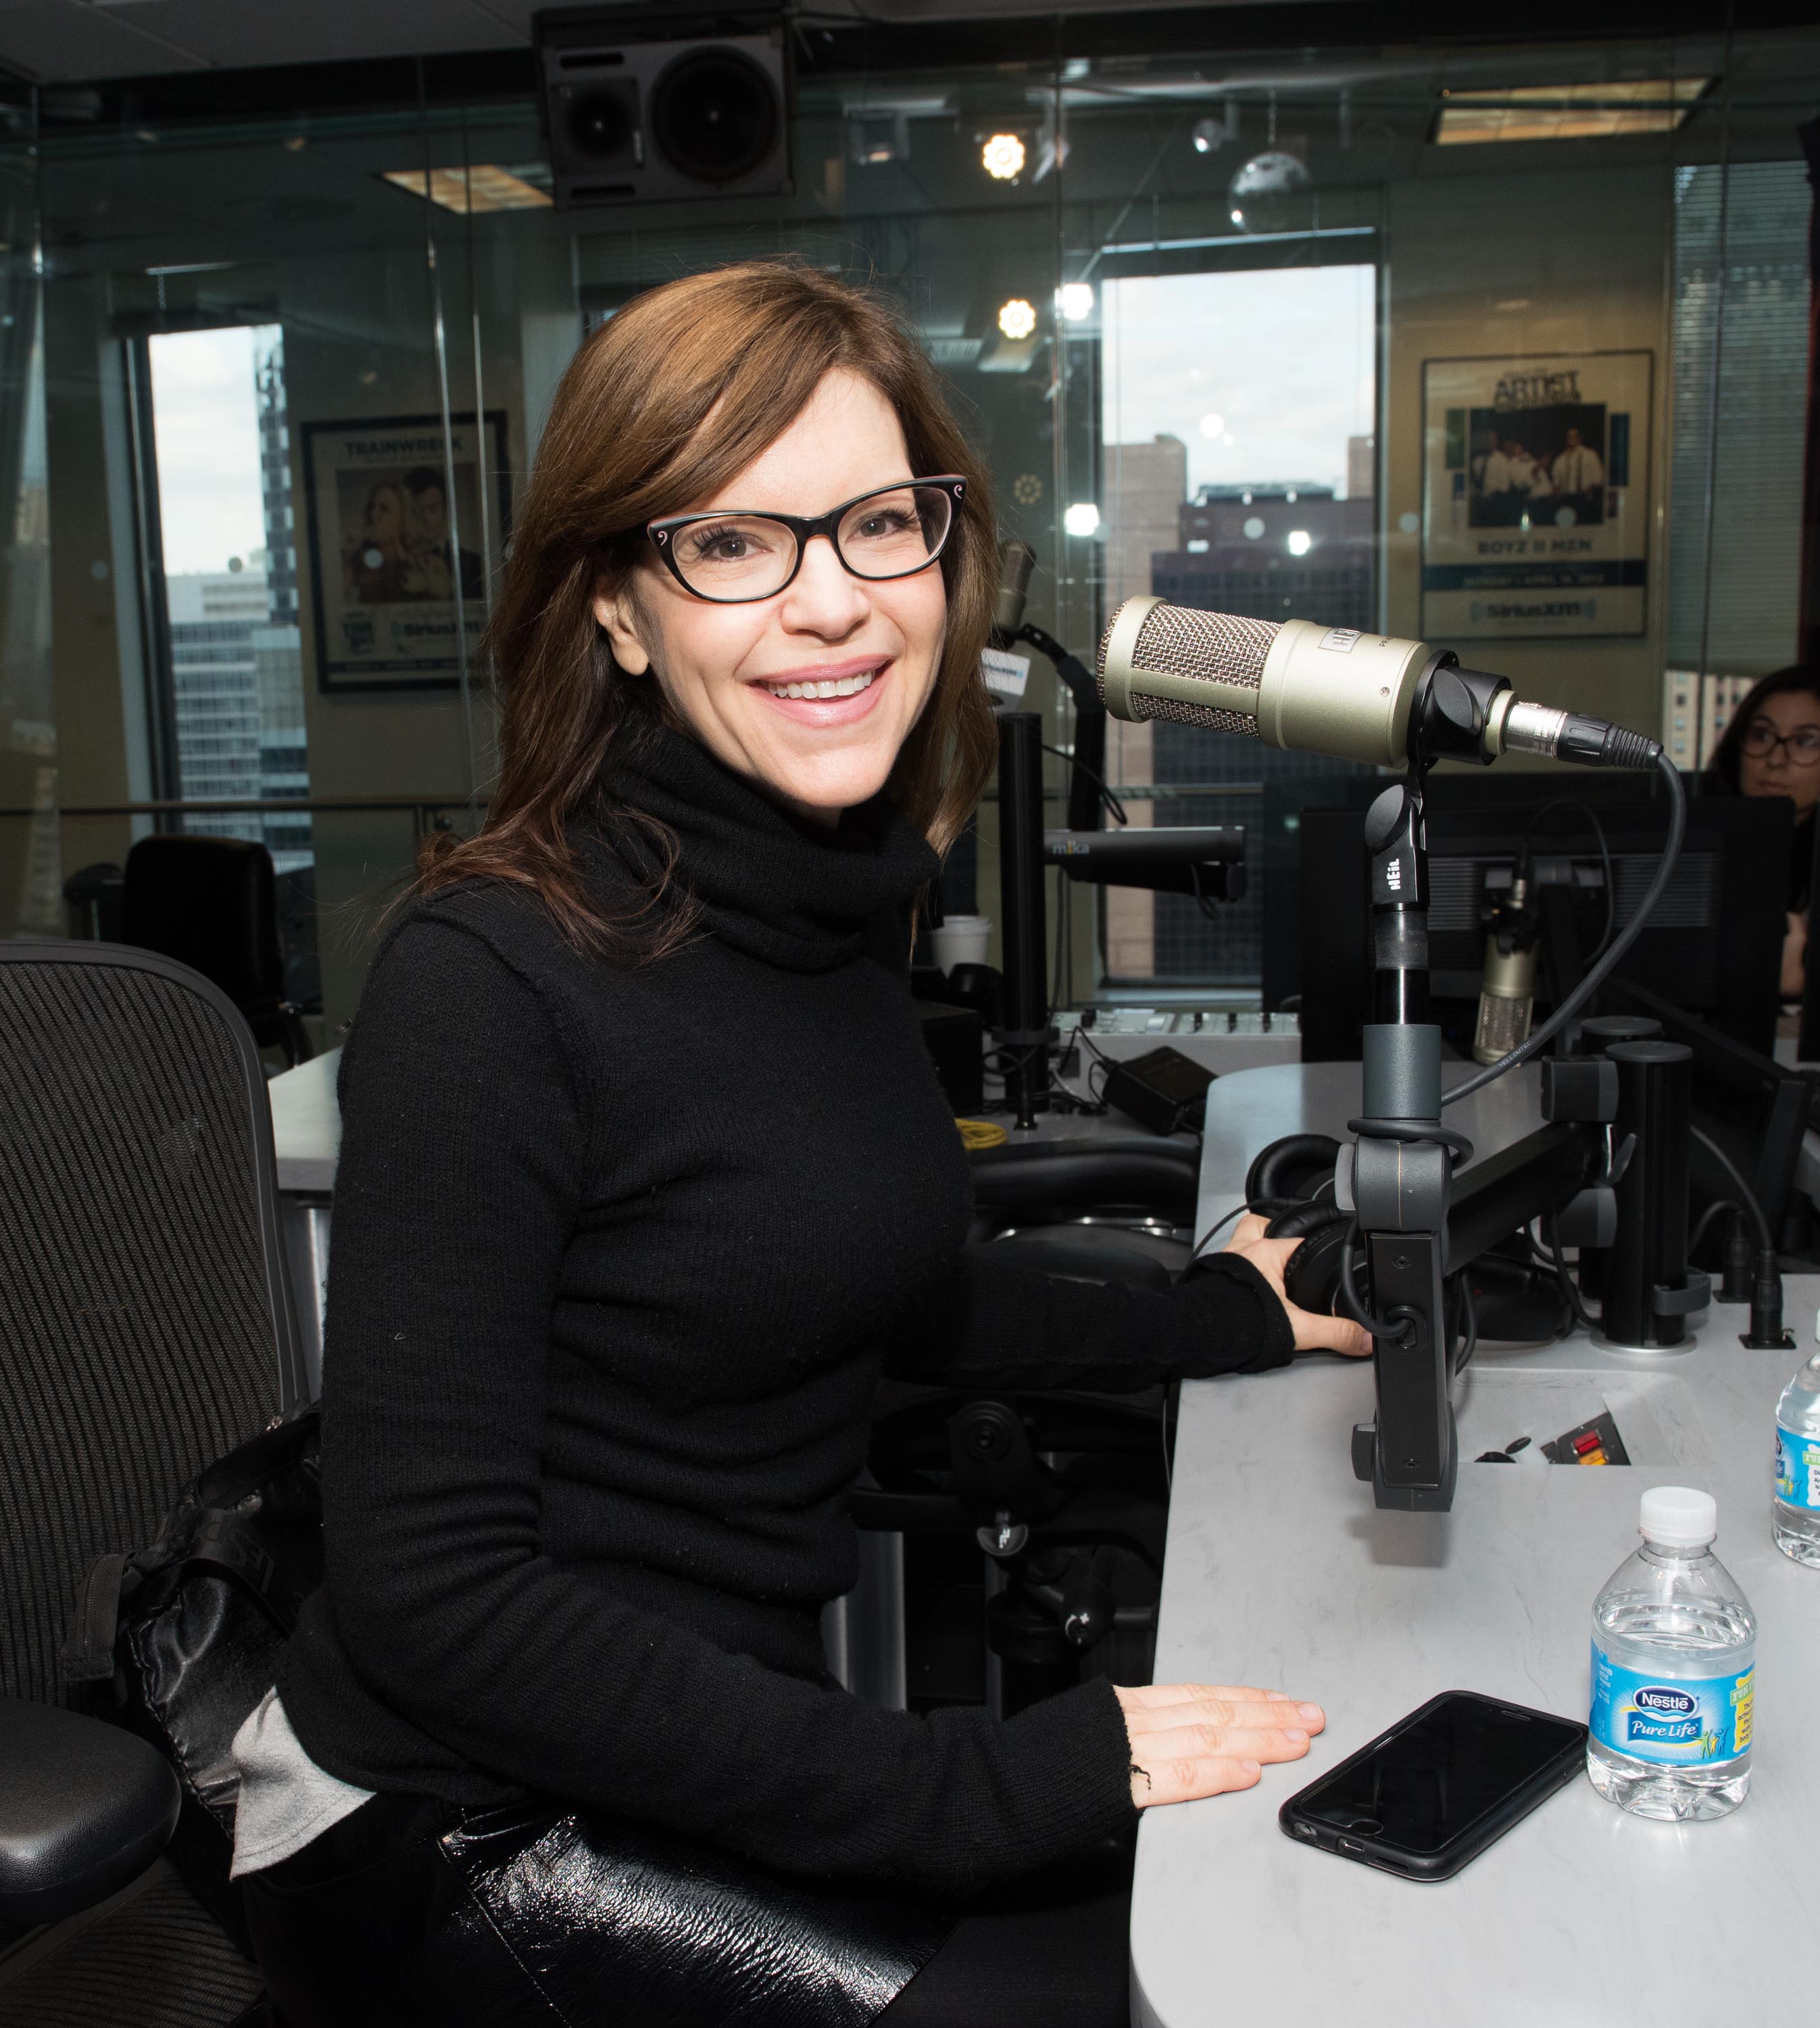 Lisa Loeb visits the SiriusXM Studio